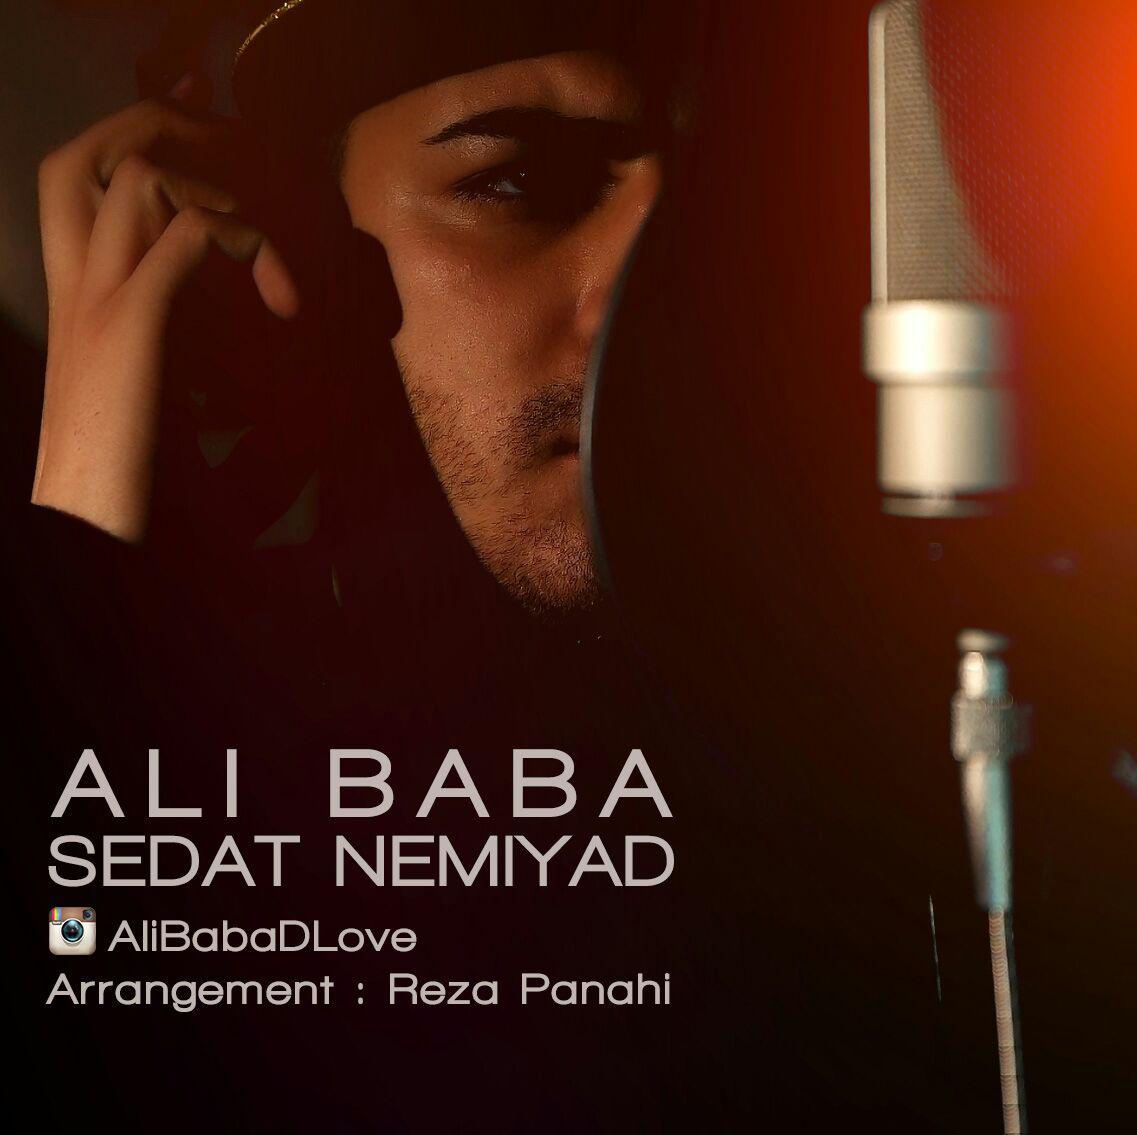 Ali Baba Sedat Nemiad 